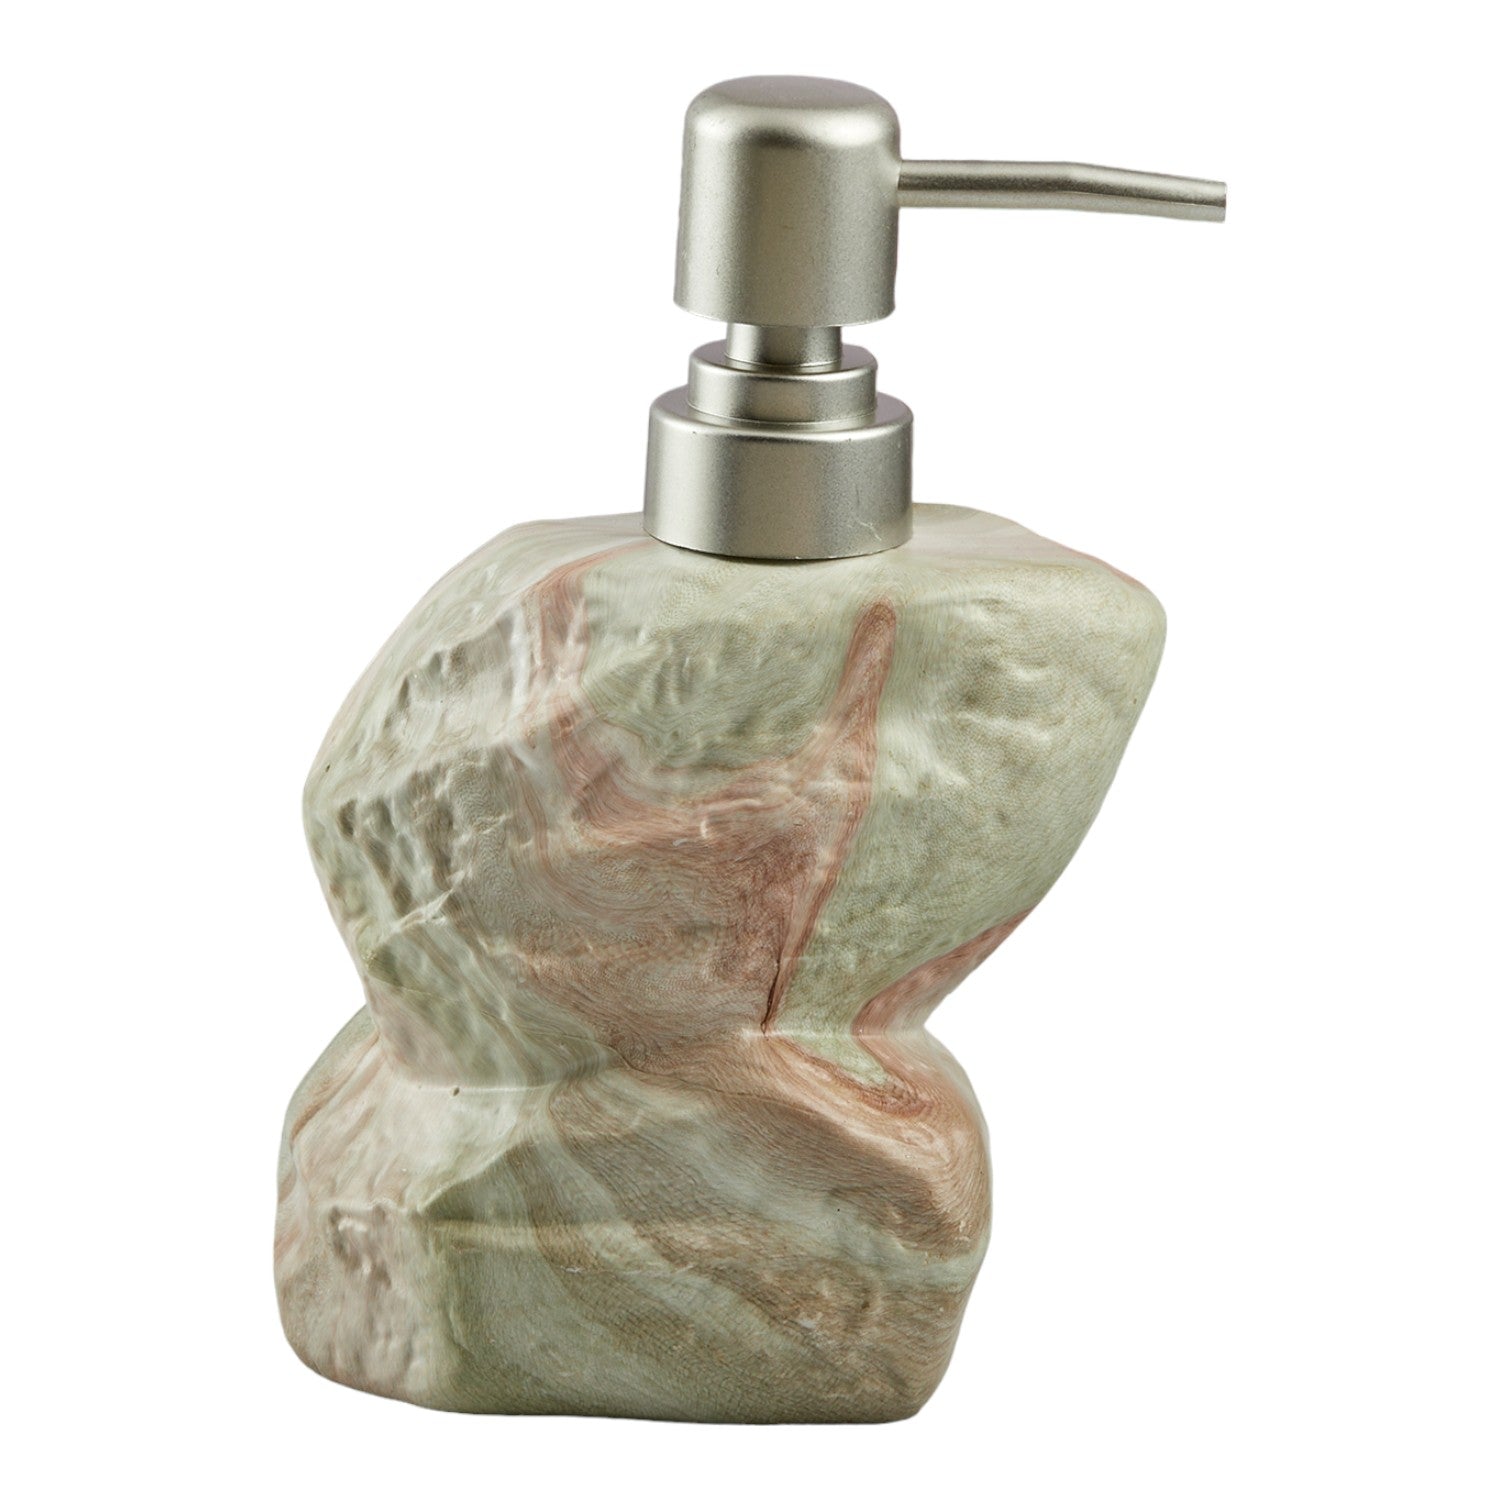 Ceramic Soap Dispenser Pump for Bathroom for Bath Gel, Lotion, Shampoo (7621)